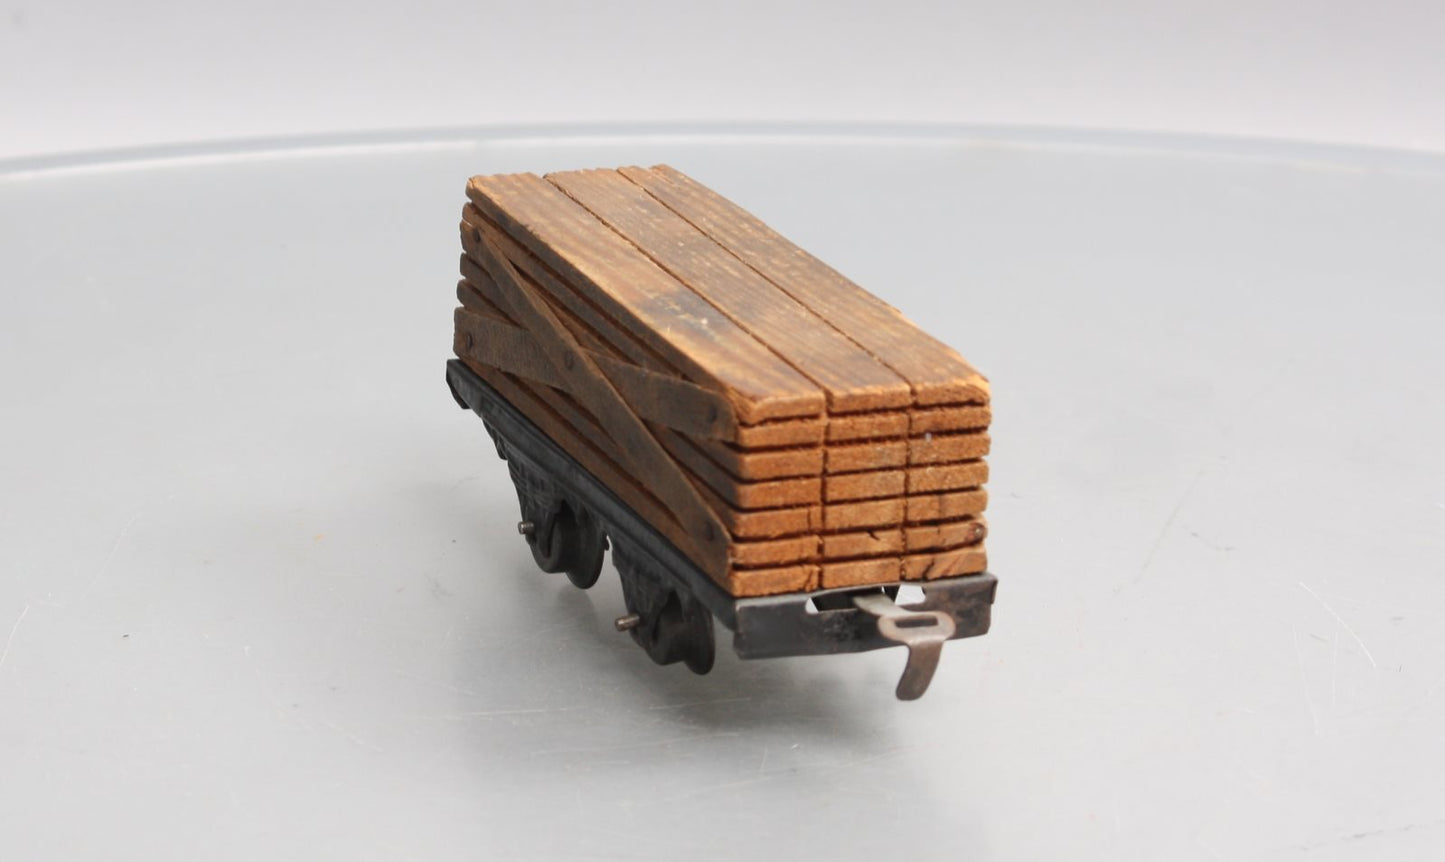 Bing Vintage O Gauge Tinplate Flatcar with Wood Load VG